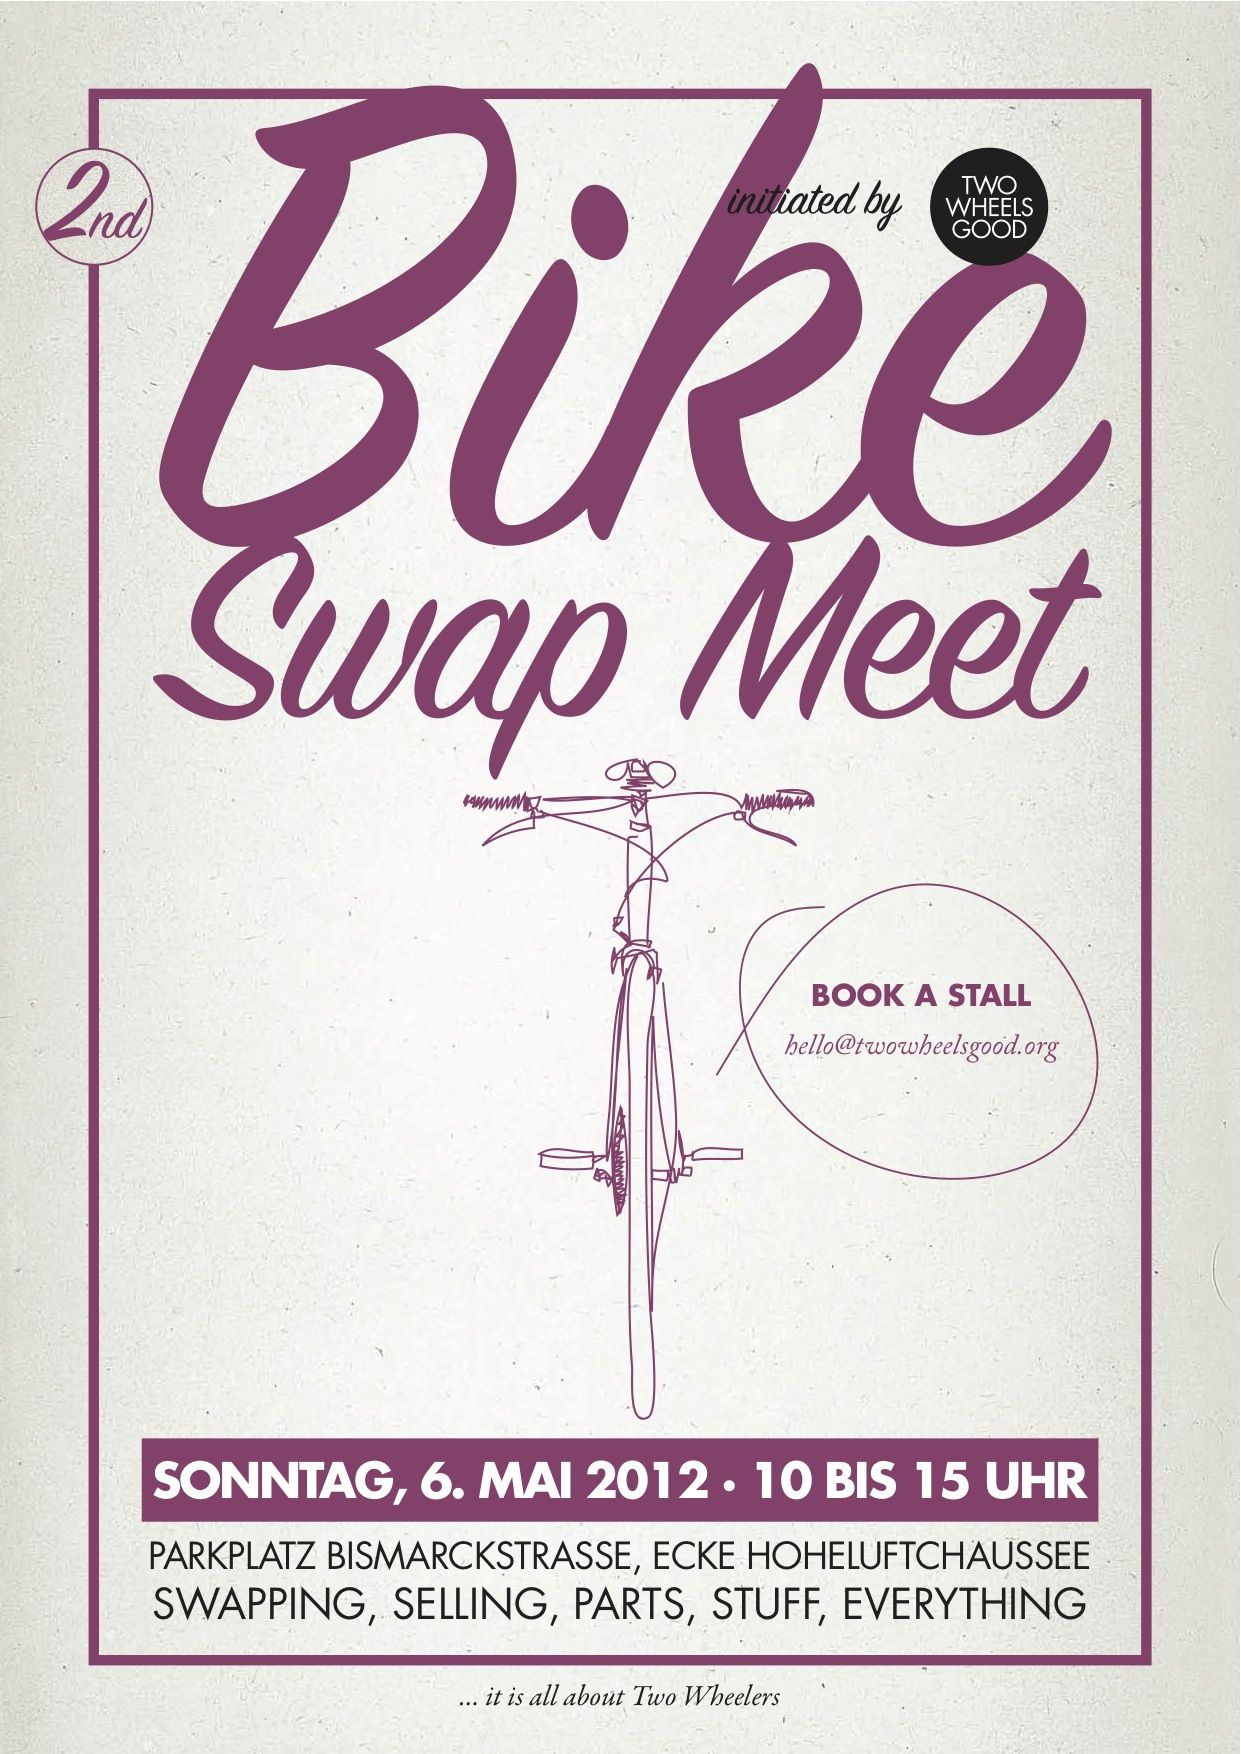 TWG-Swap-Meet-2012_02_s.jpg